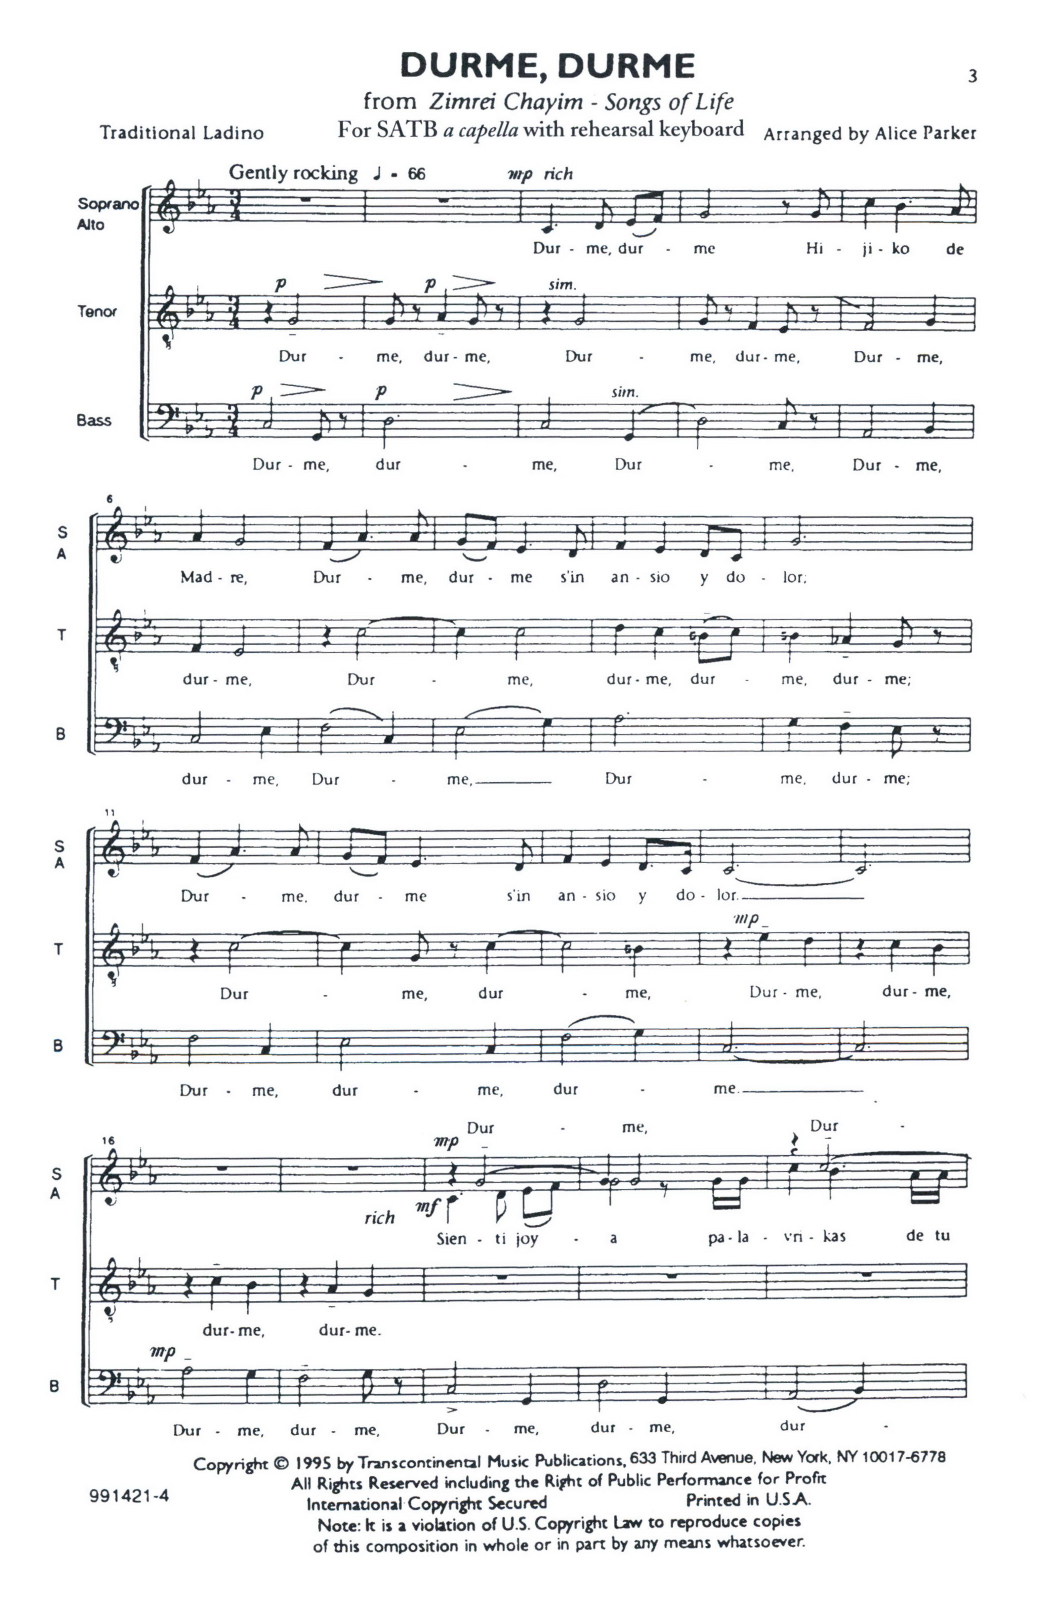 Alice Parker Durme, Durme (Sleep, Sleep) Sheet Music Notes & Chords for SSA Choir - Download or Print PDF